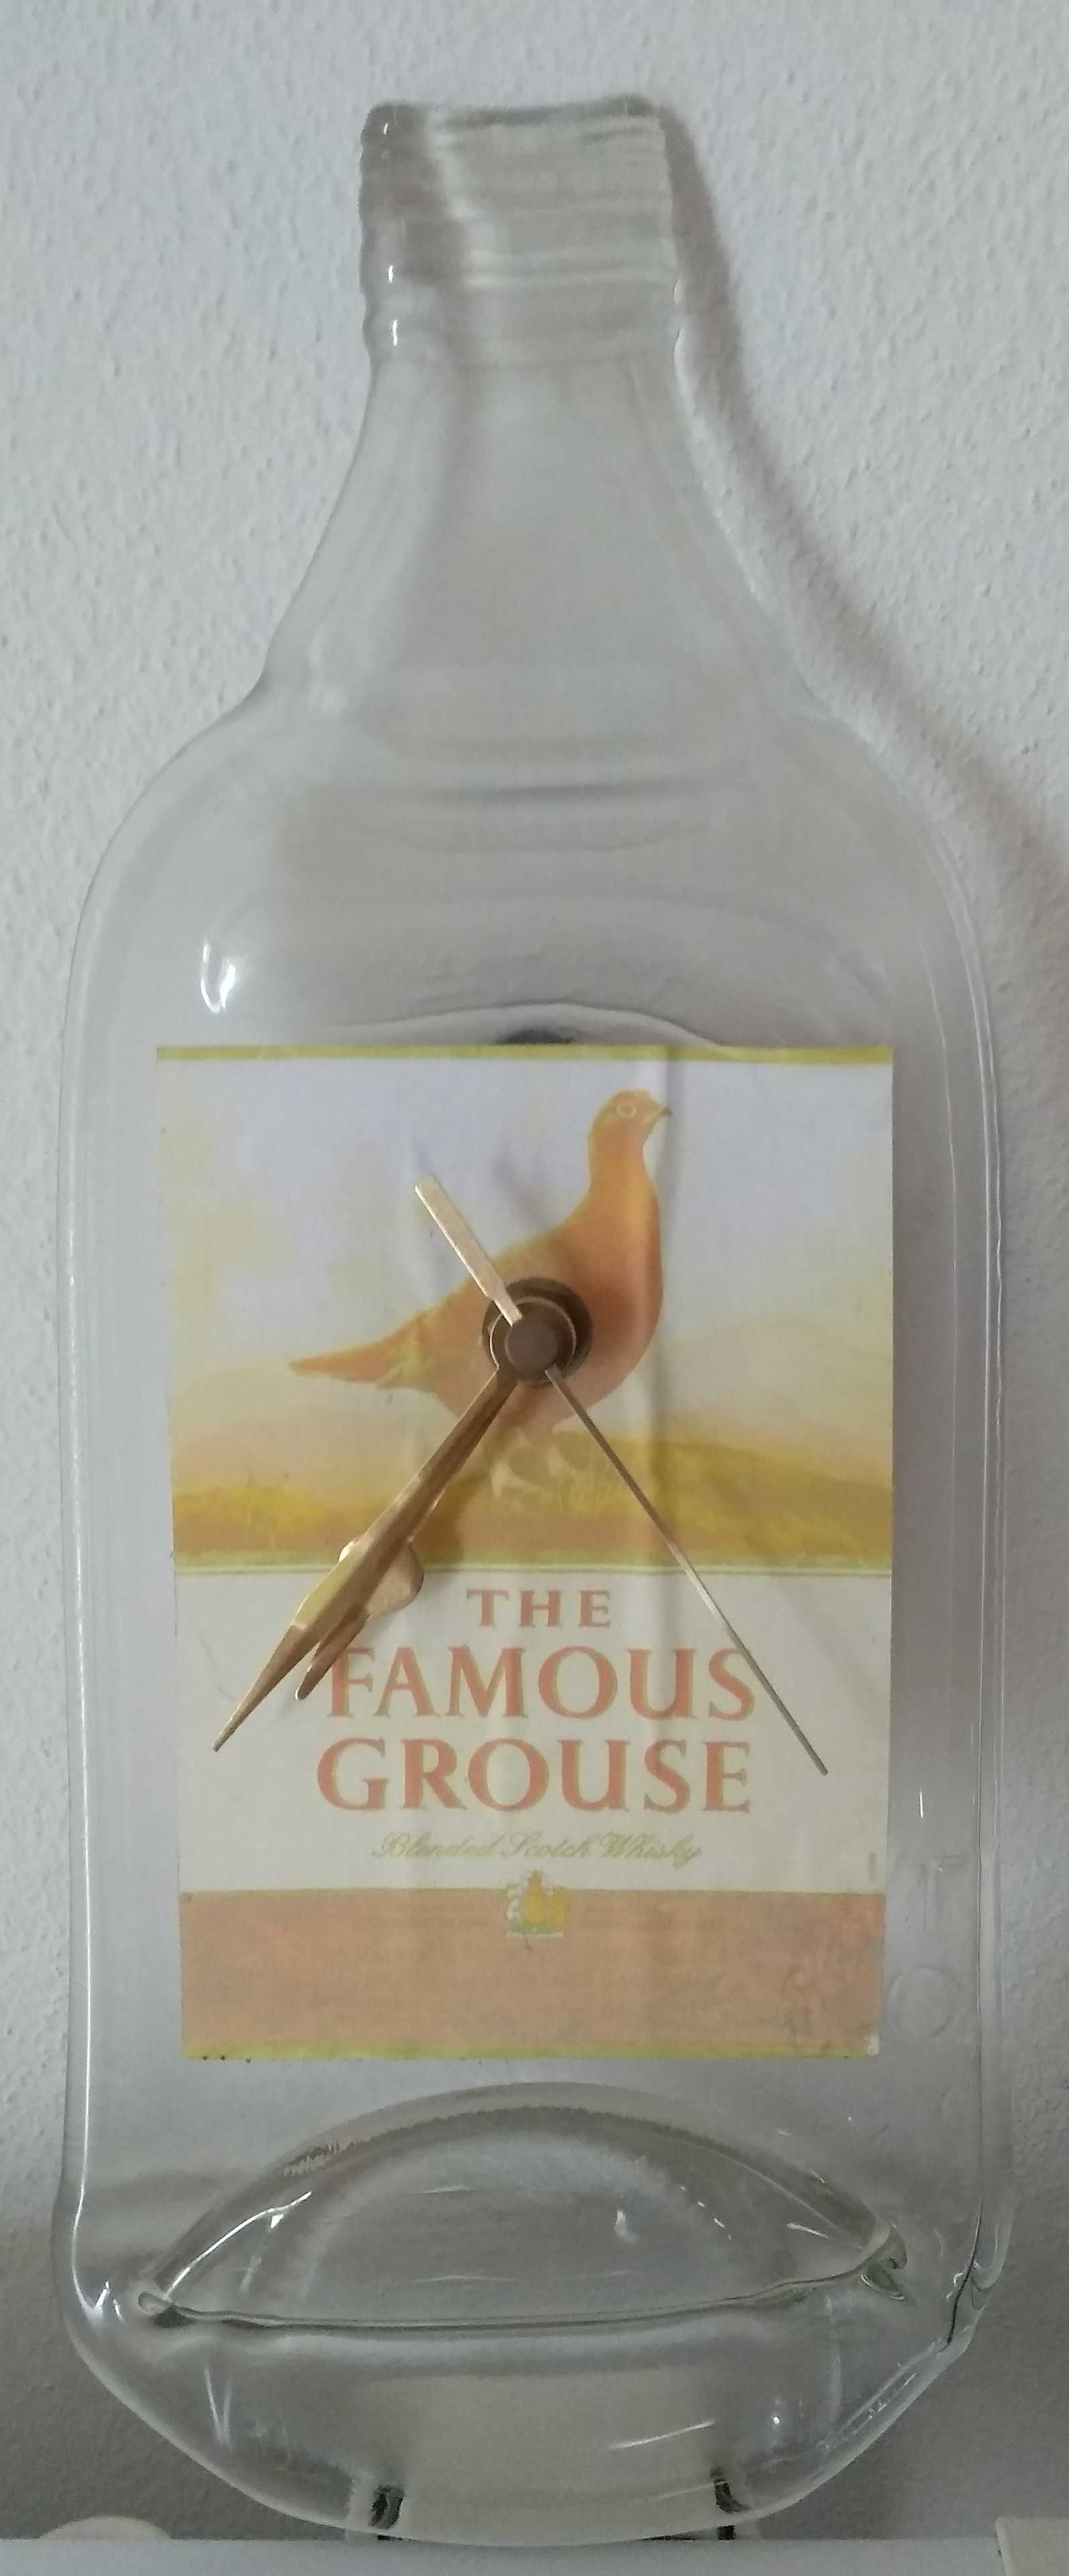 Relógio de parede do whisky The Famous Grouse